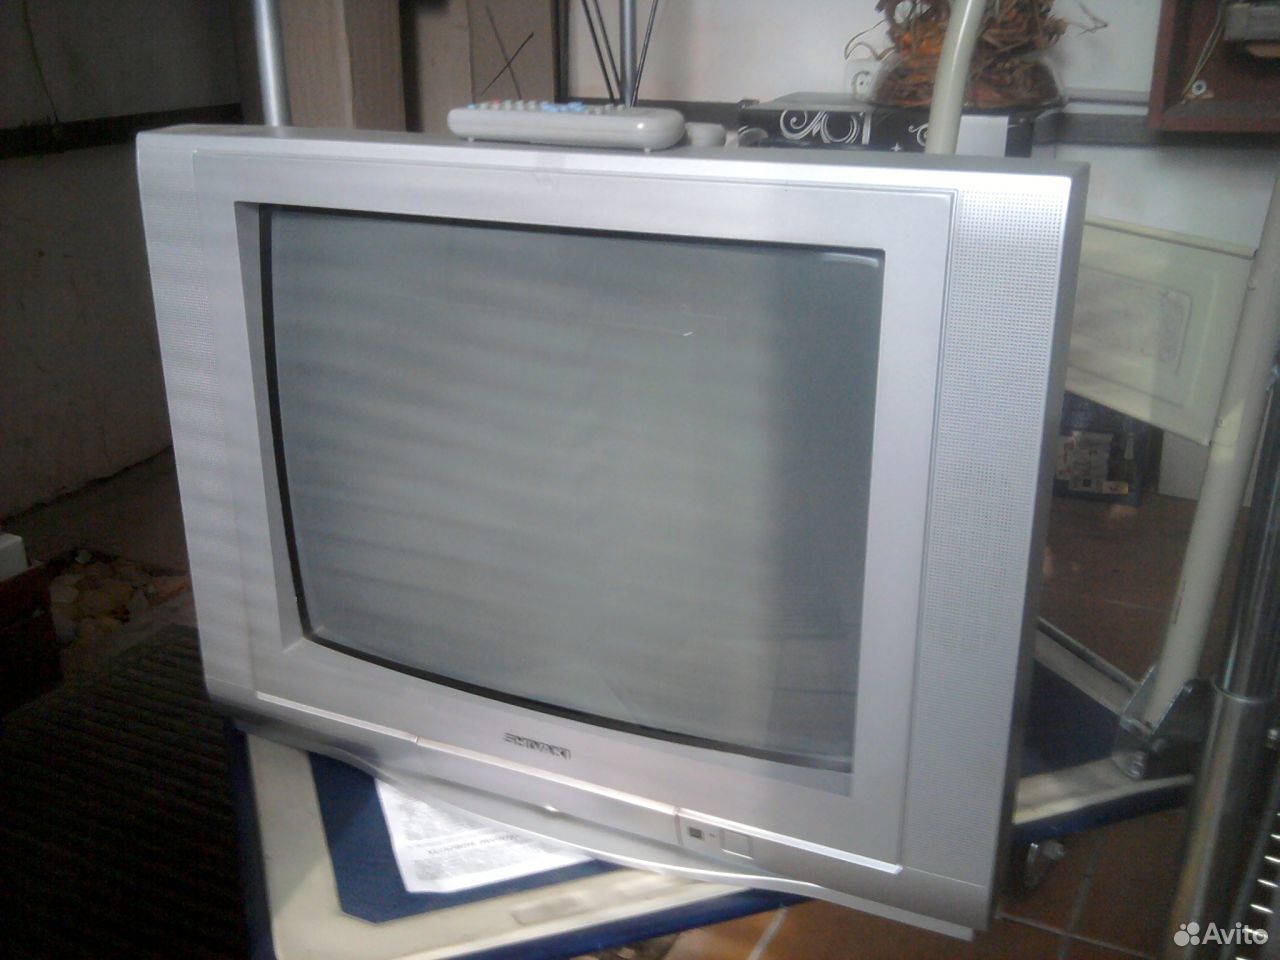 Sharp телевизор модели